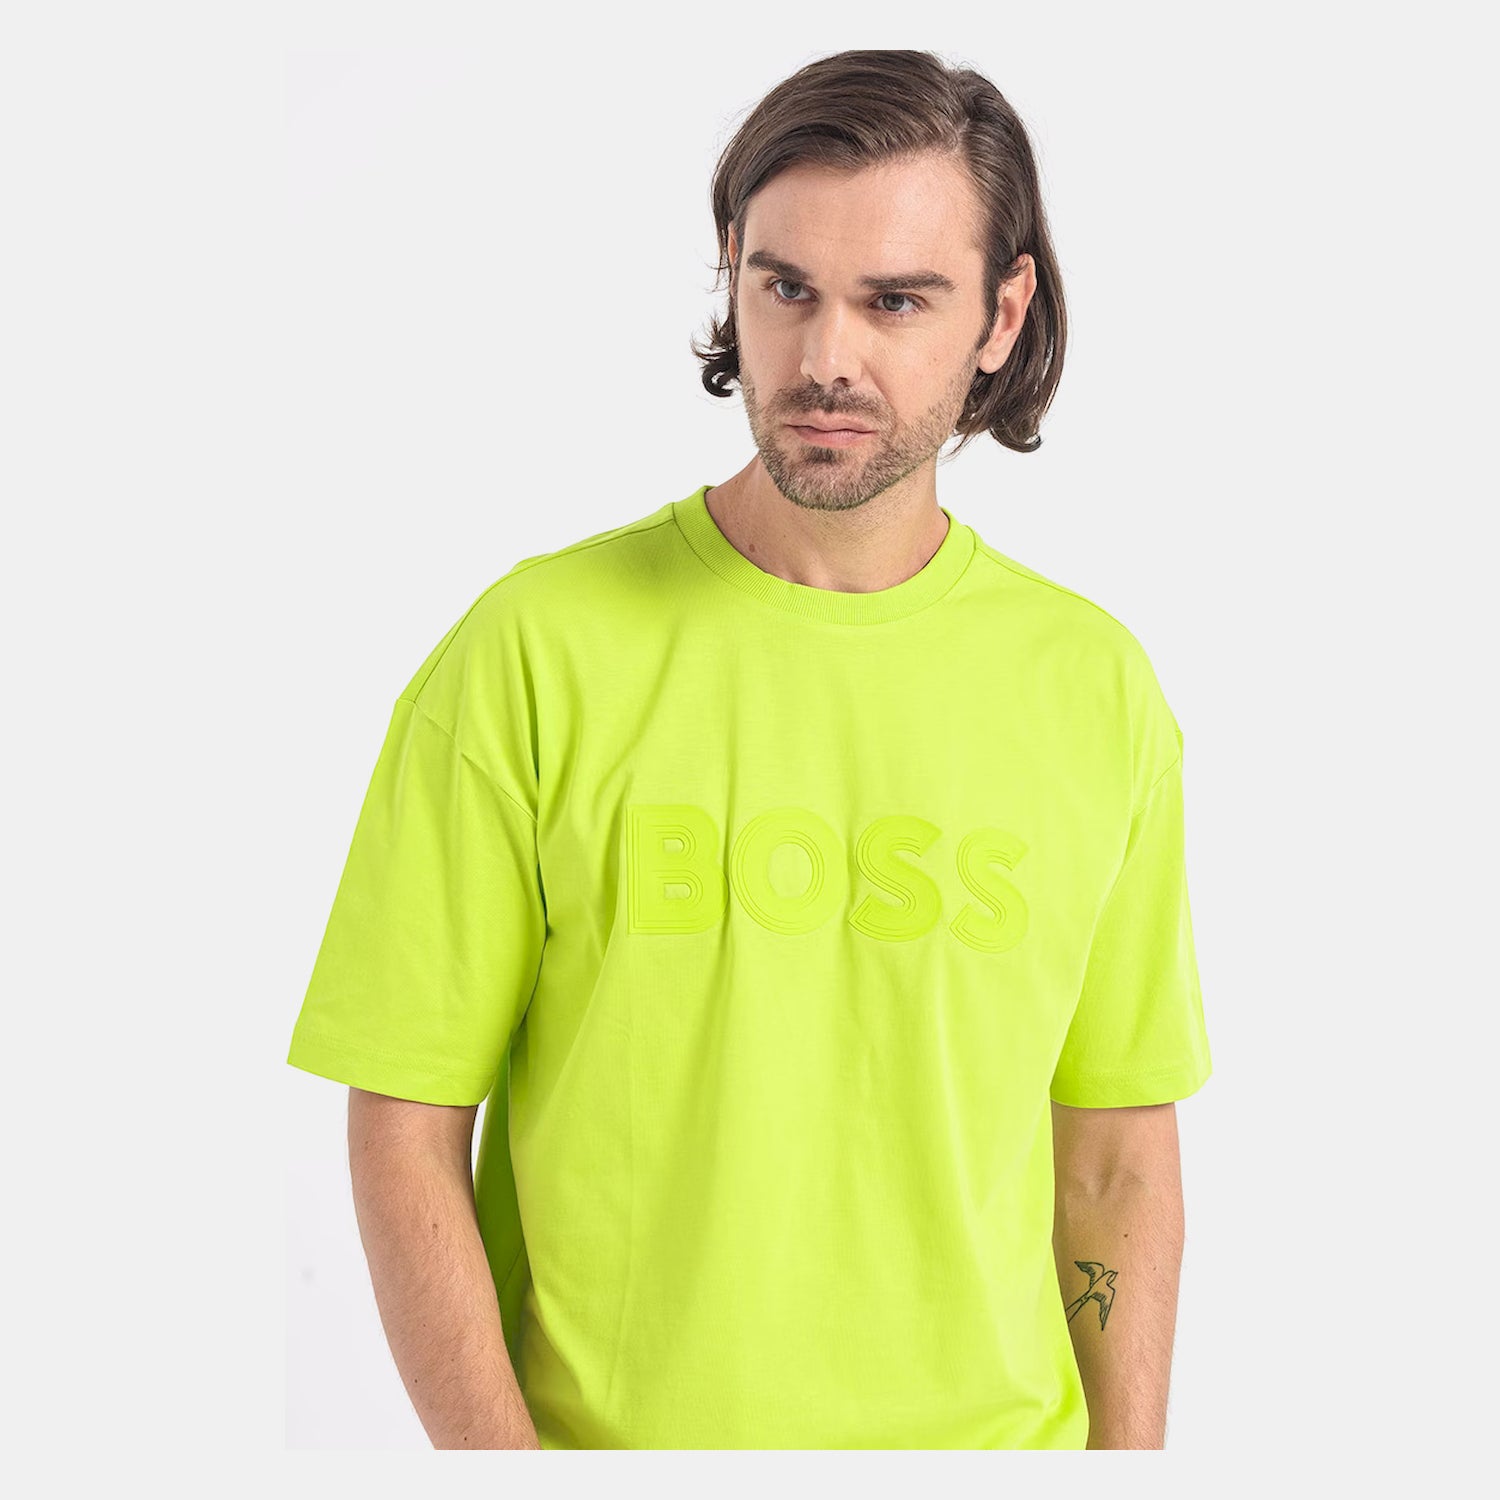 boss-t-shirt-tee-lotus-5050-green-yell-verde-amarelo_shot4